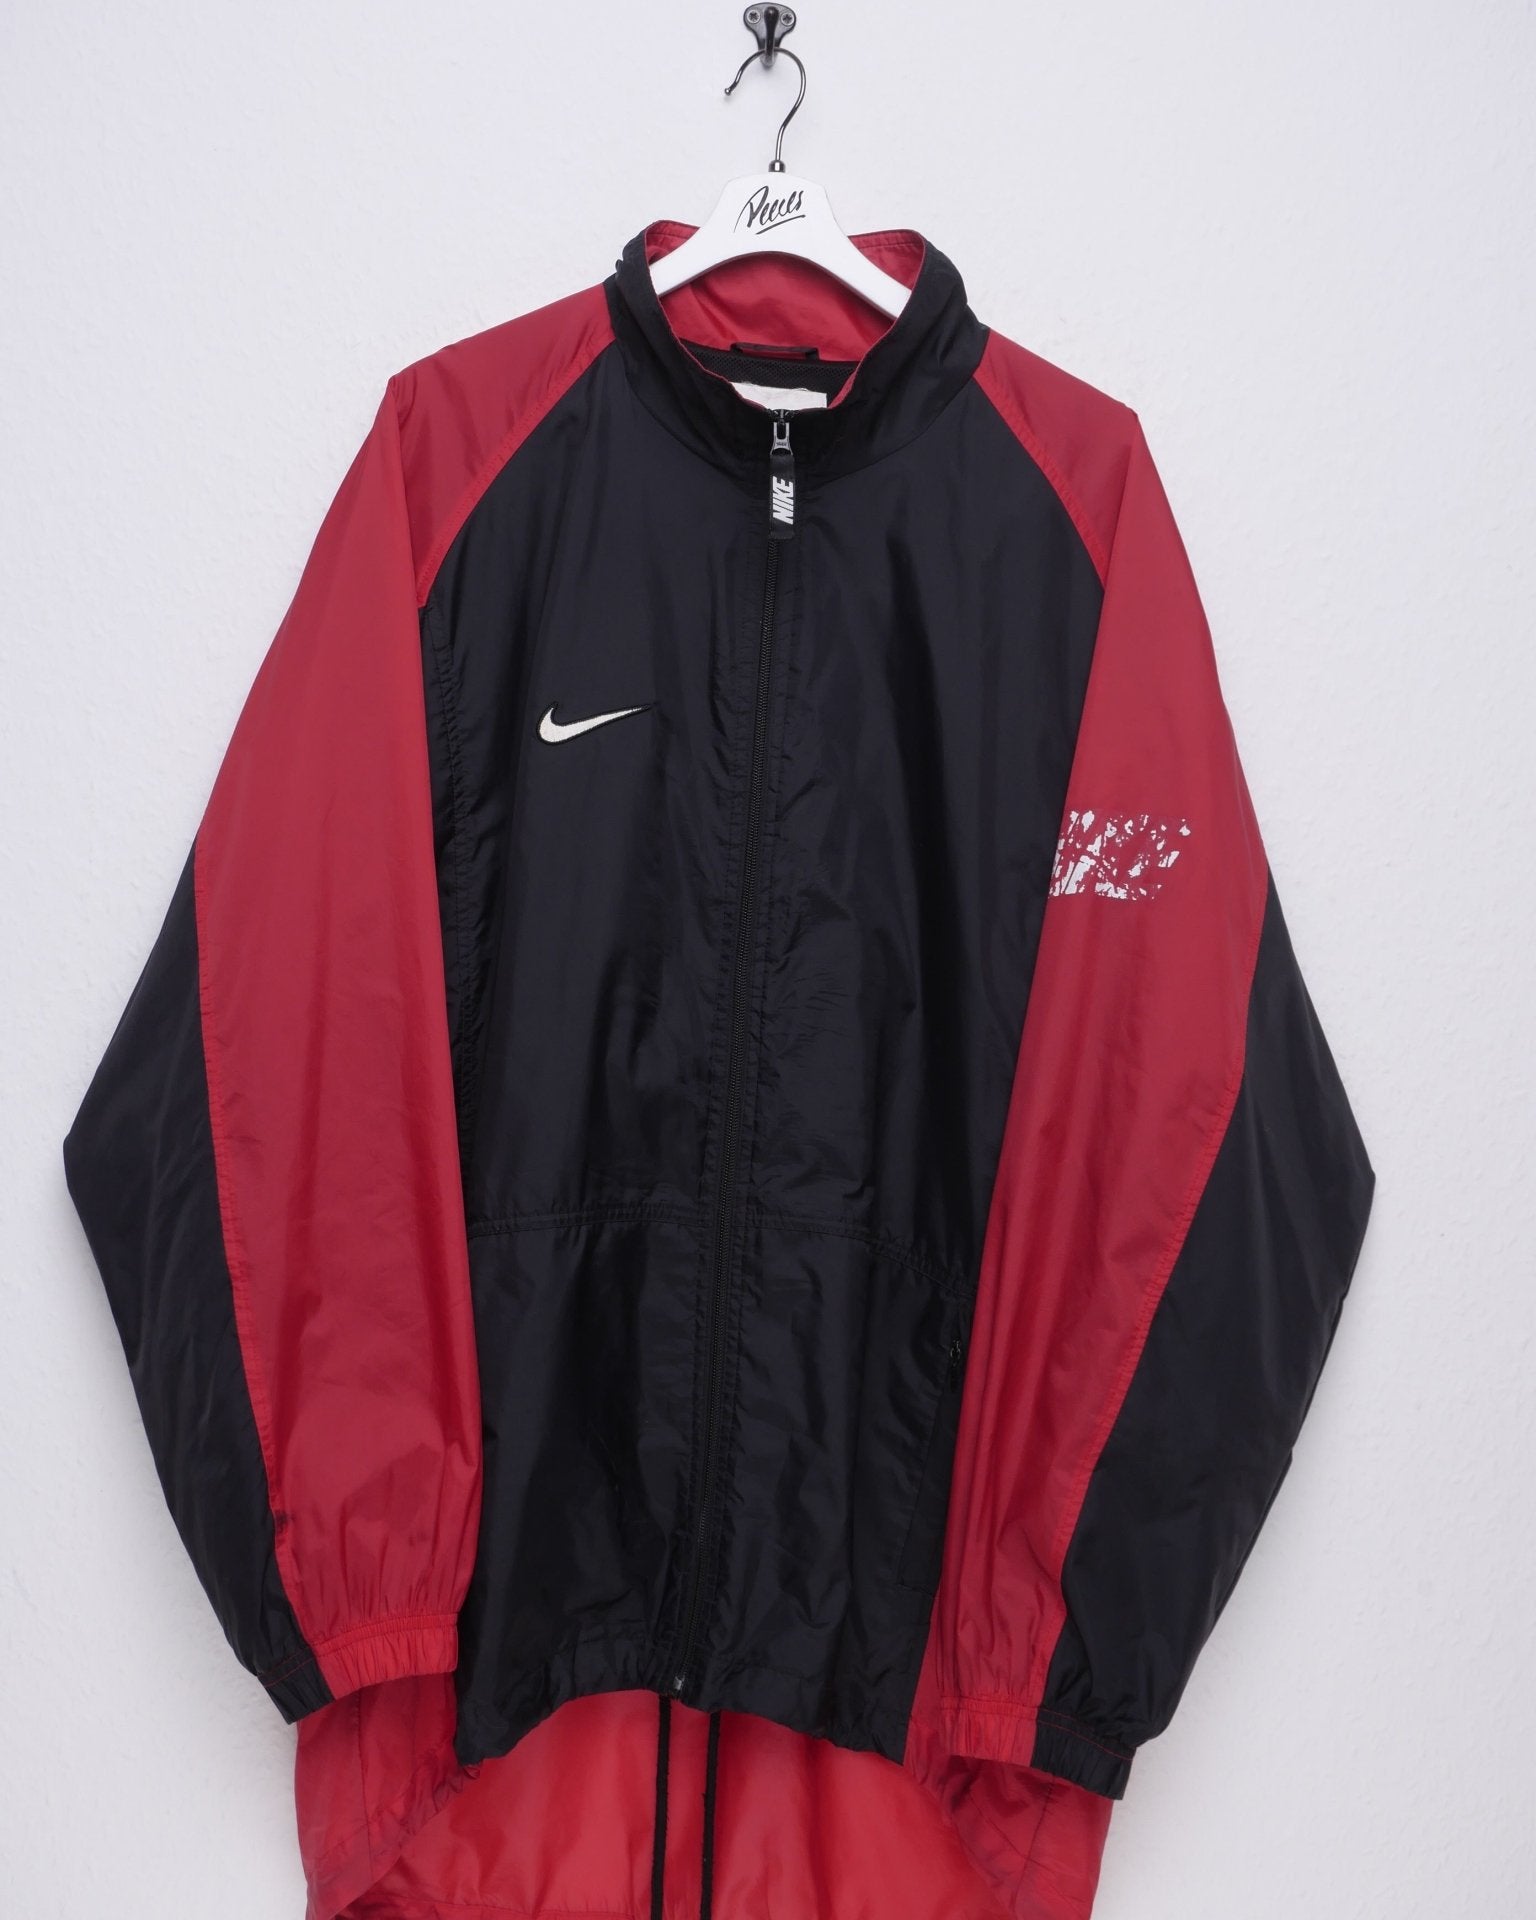 Nike embroidered Logo Vintage Track Jacket - Peeces